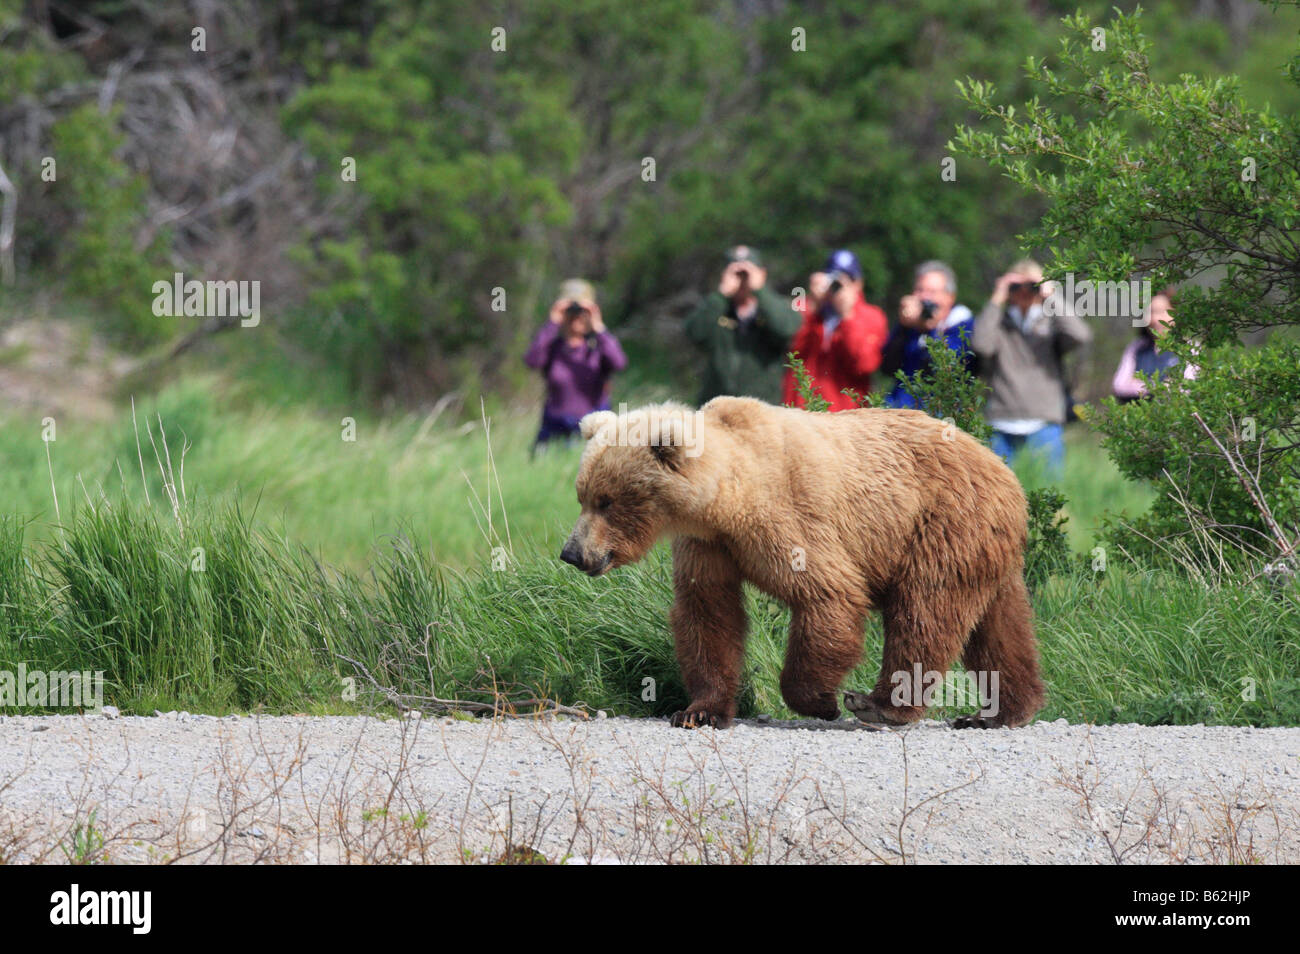 An Alaskan Brown or Grizzly Bear (Ursus arctos) walks along a path at the Brooks Lodge in Katmai National Park, Alaska. Stock Photo